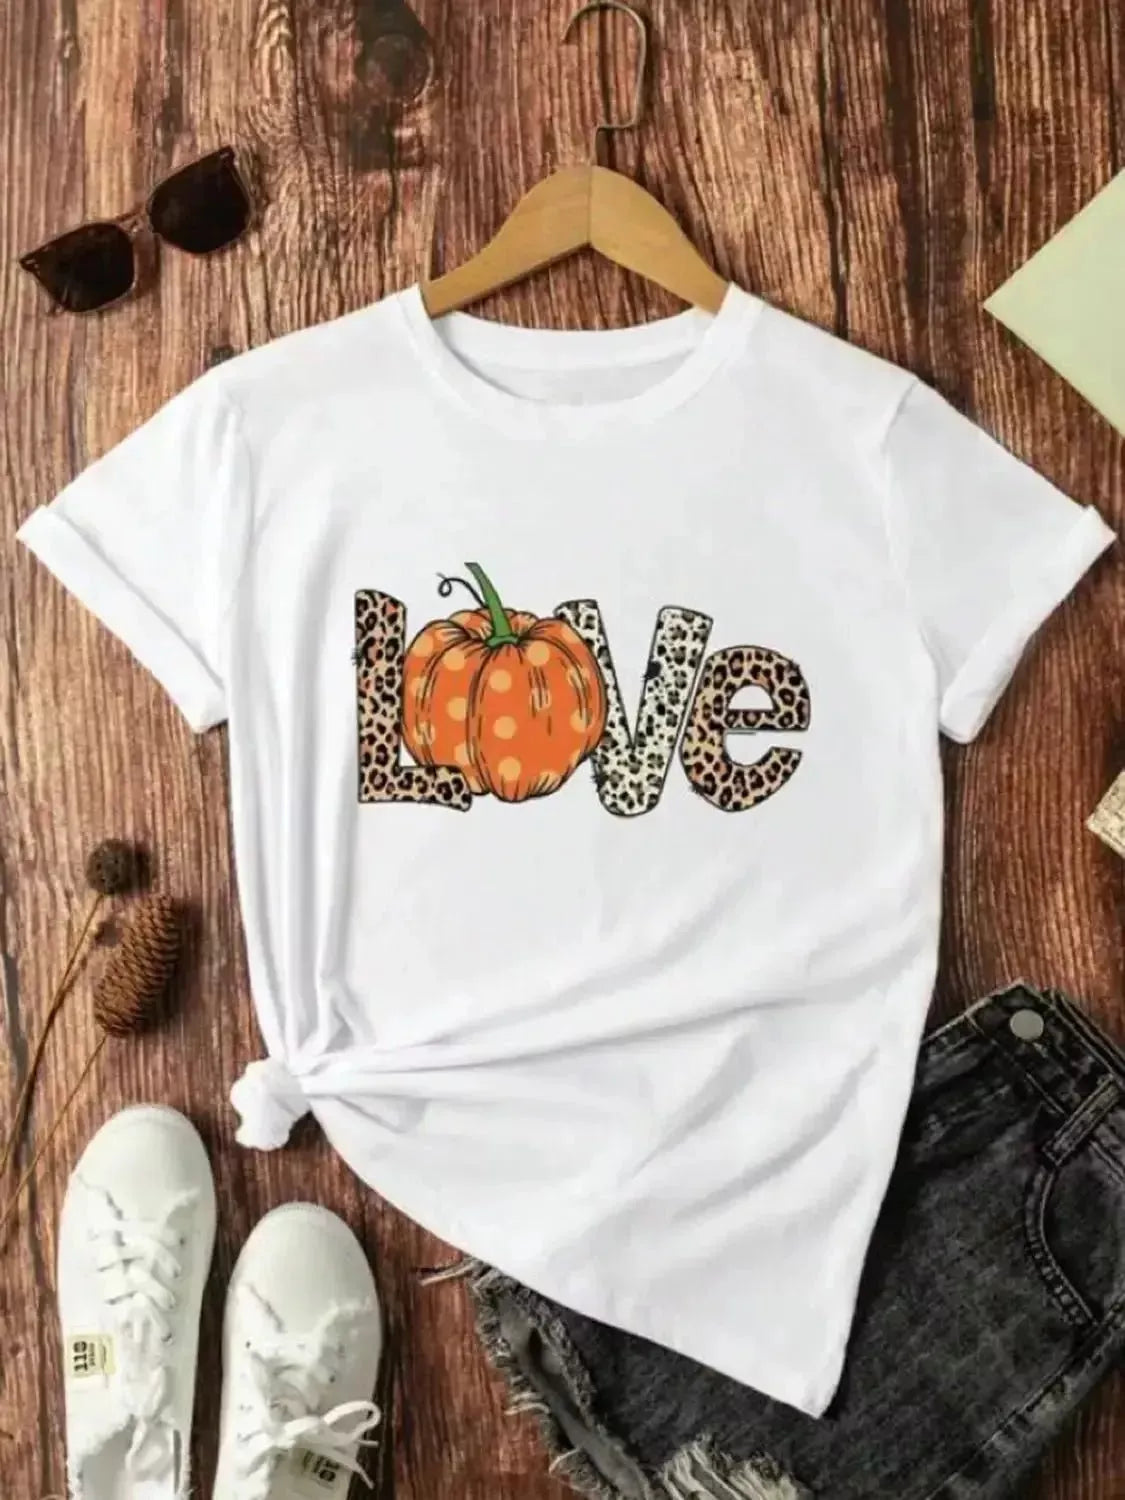 Simply Love Full Size LOVE Graphic T-Shirt - Godiva Oya Bey